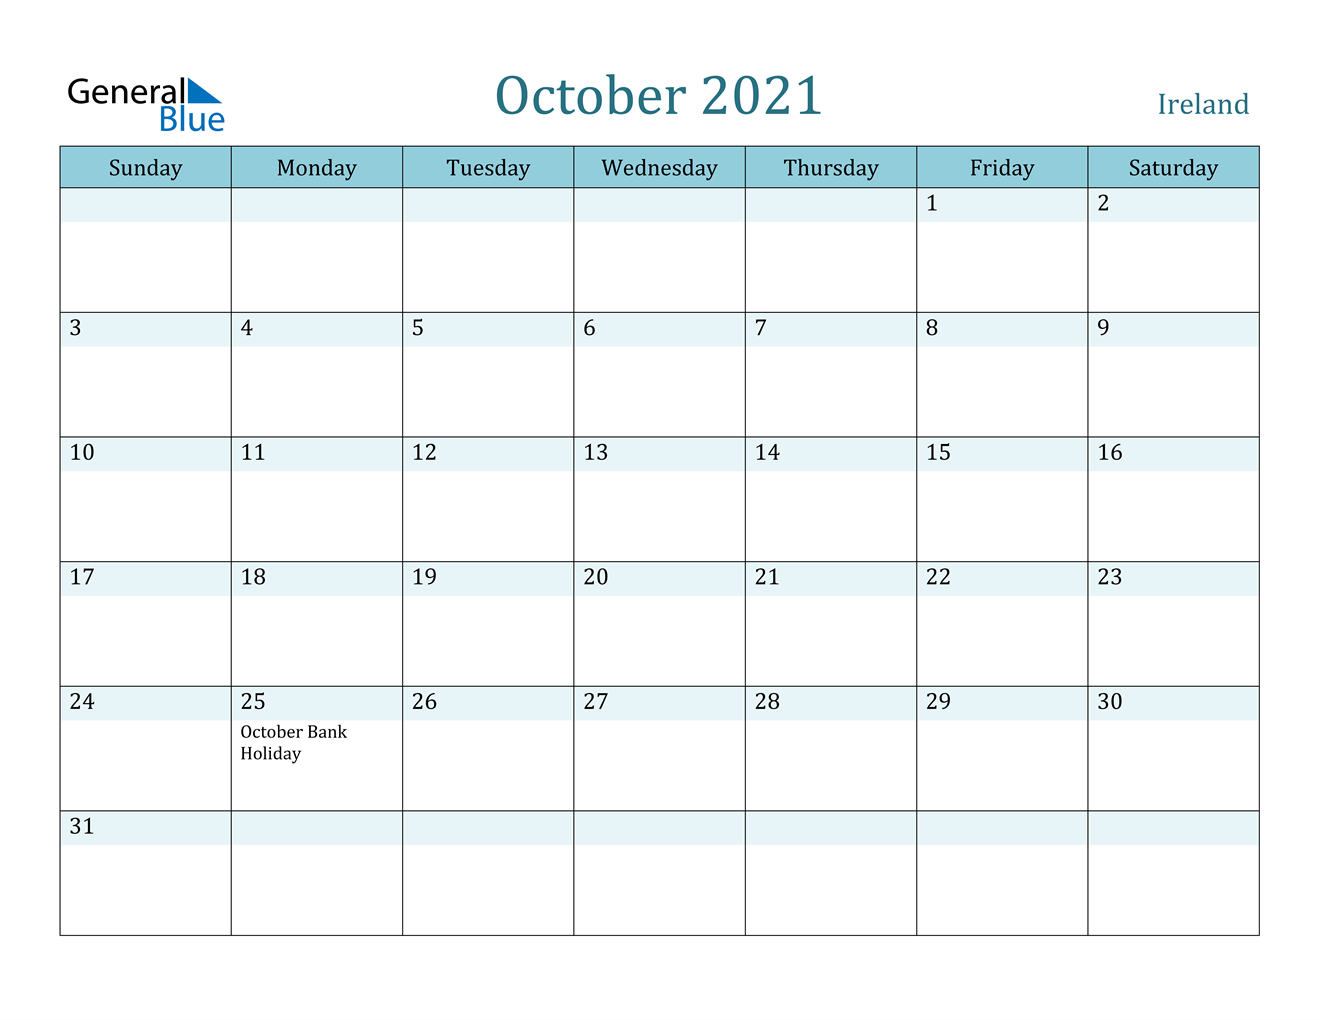 October 2021 Calendar - Ireland